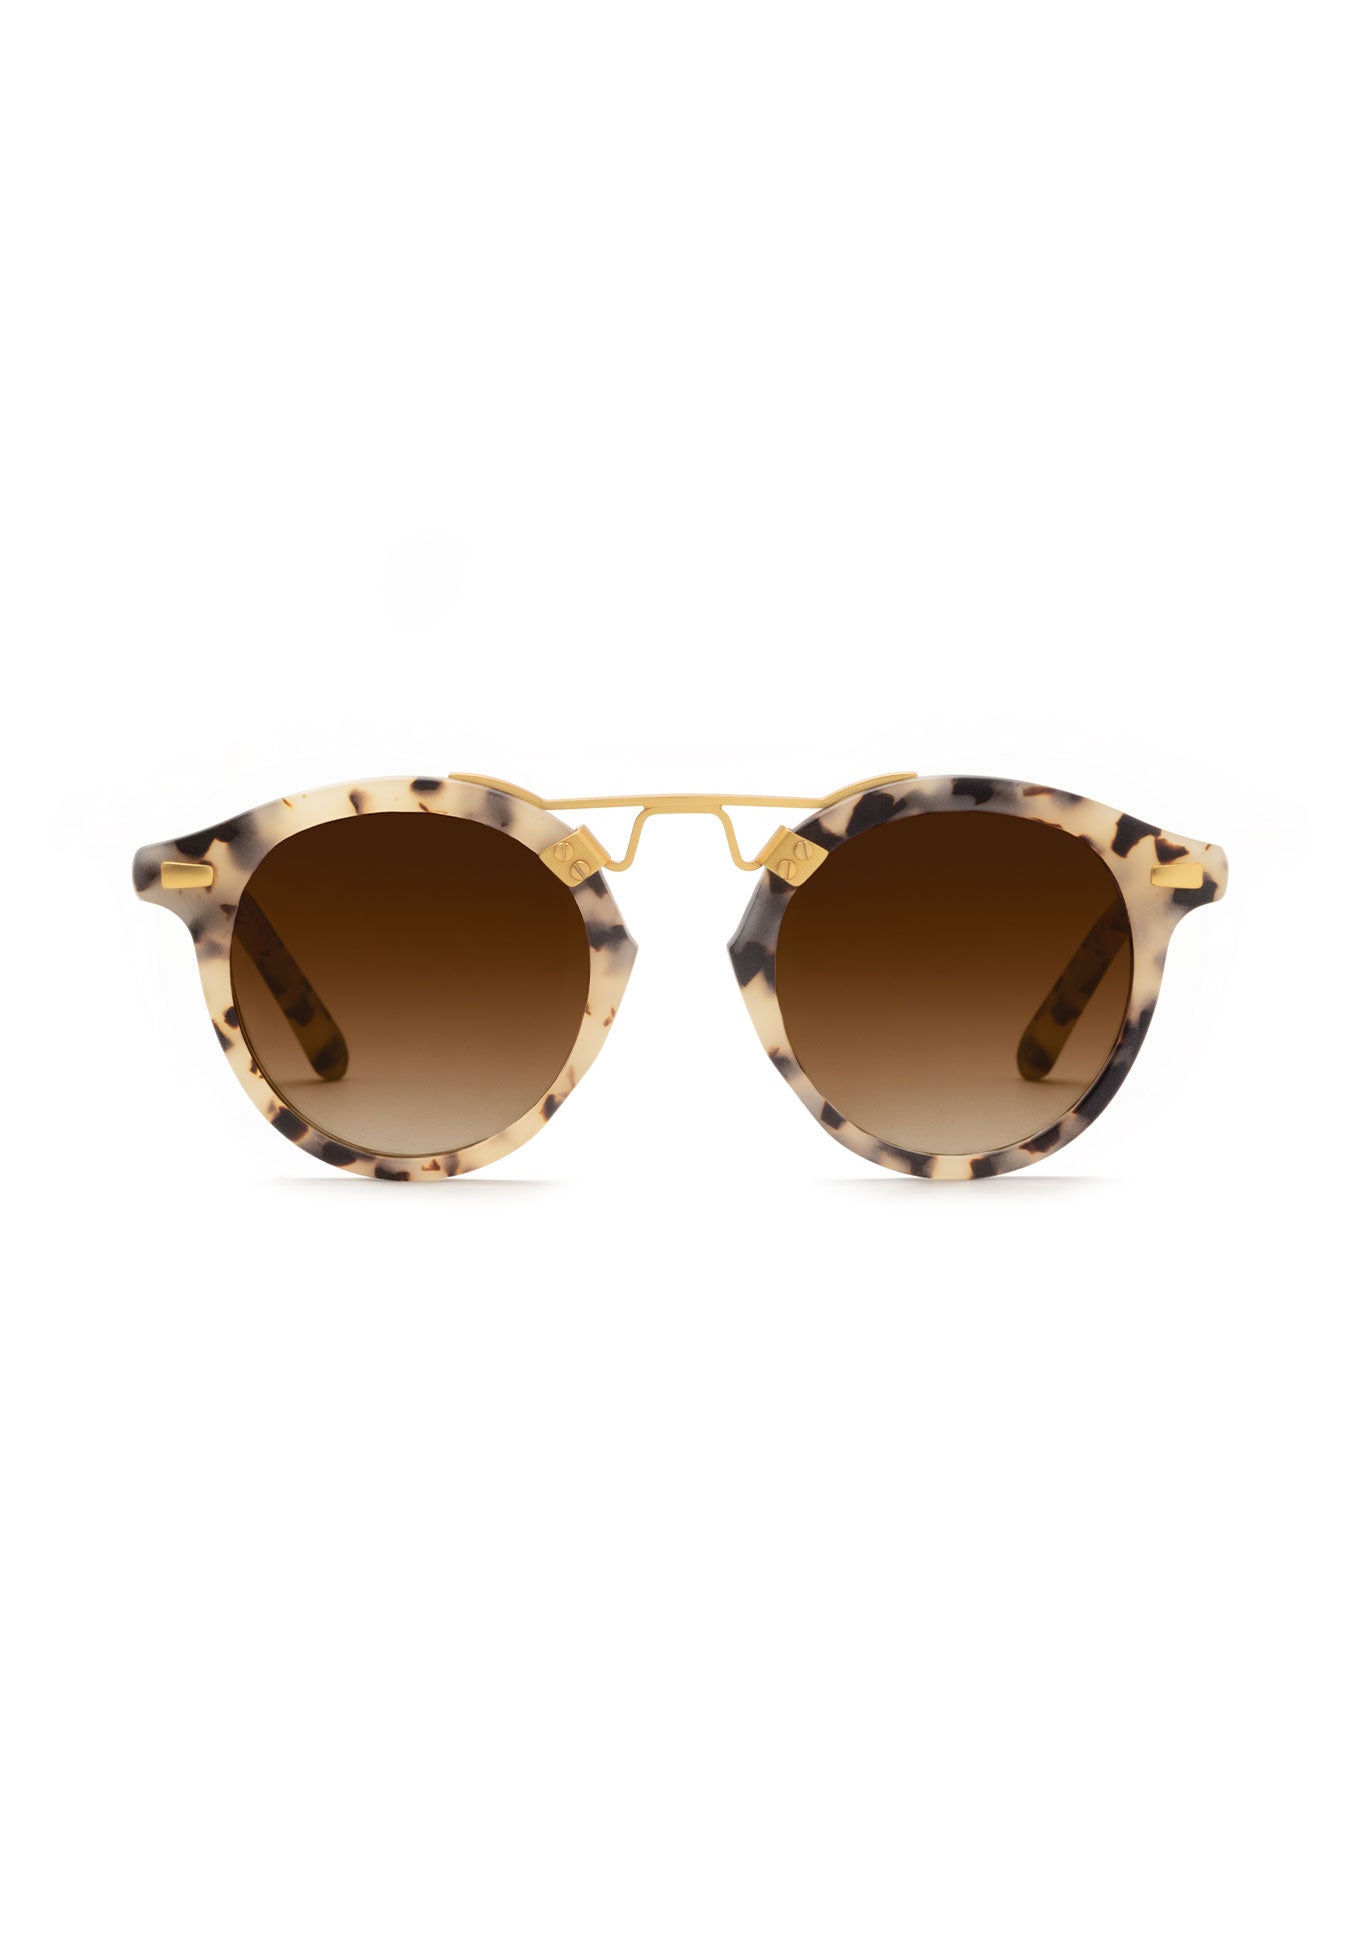 St. Louis 24K Polarized Round Sunglasses, 46mm